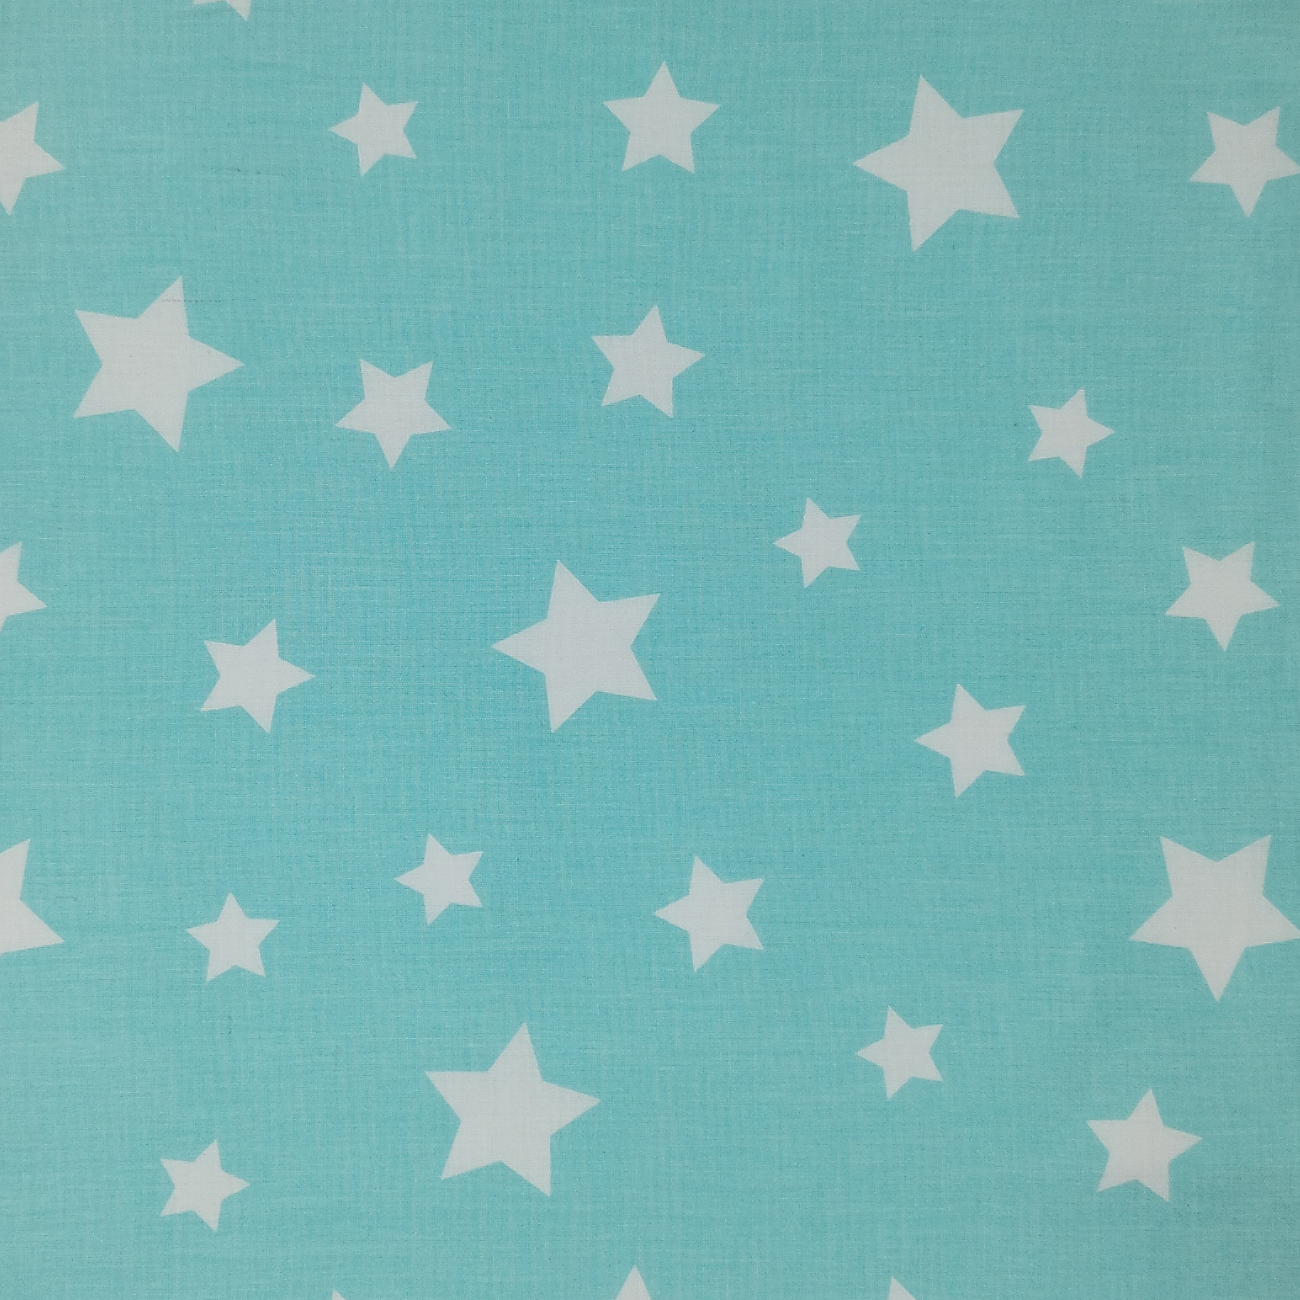 STARS ON TURQUOISE - Cotton woven fabric